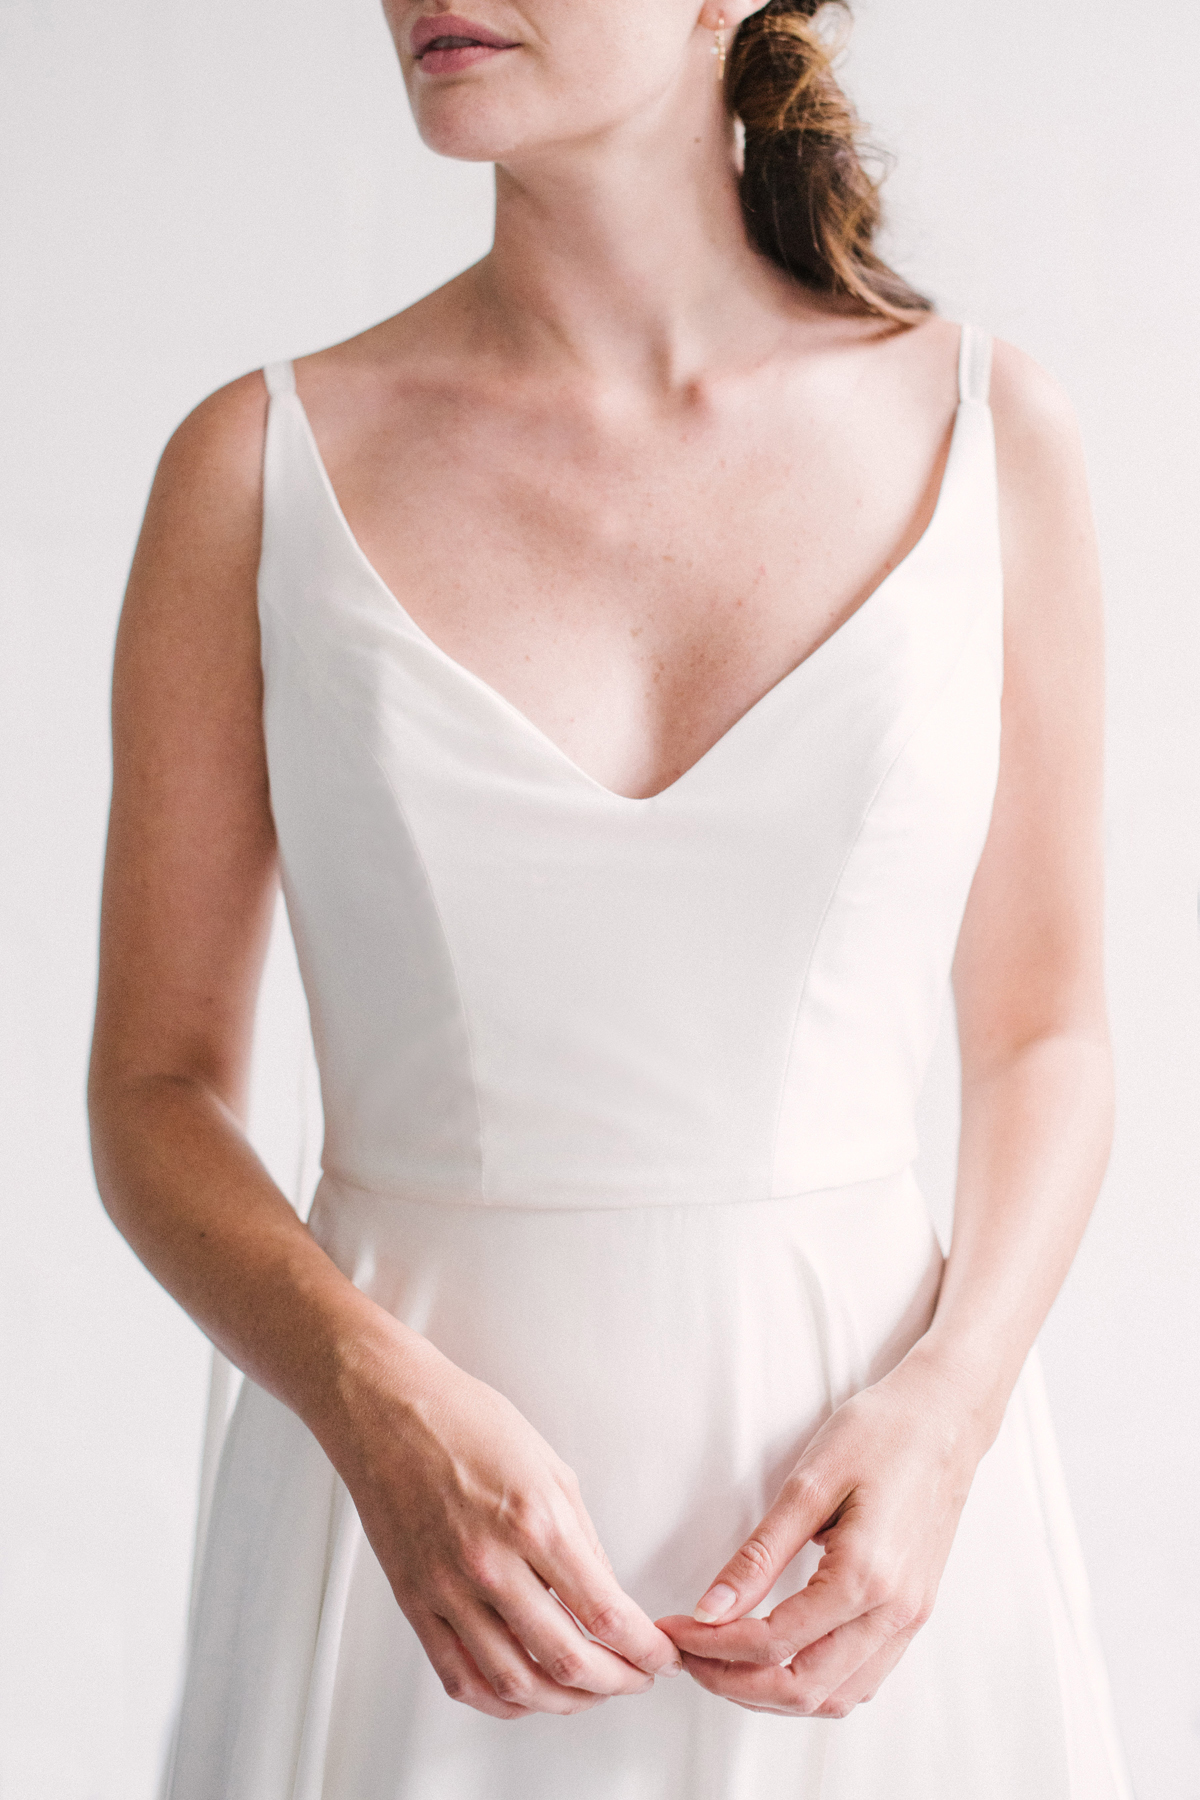 Pearl dress, Naomi Neoh 2018